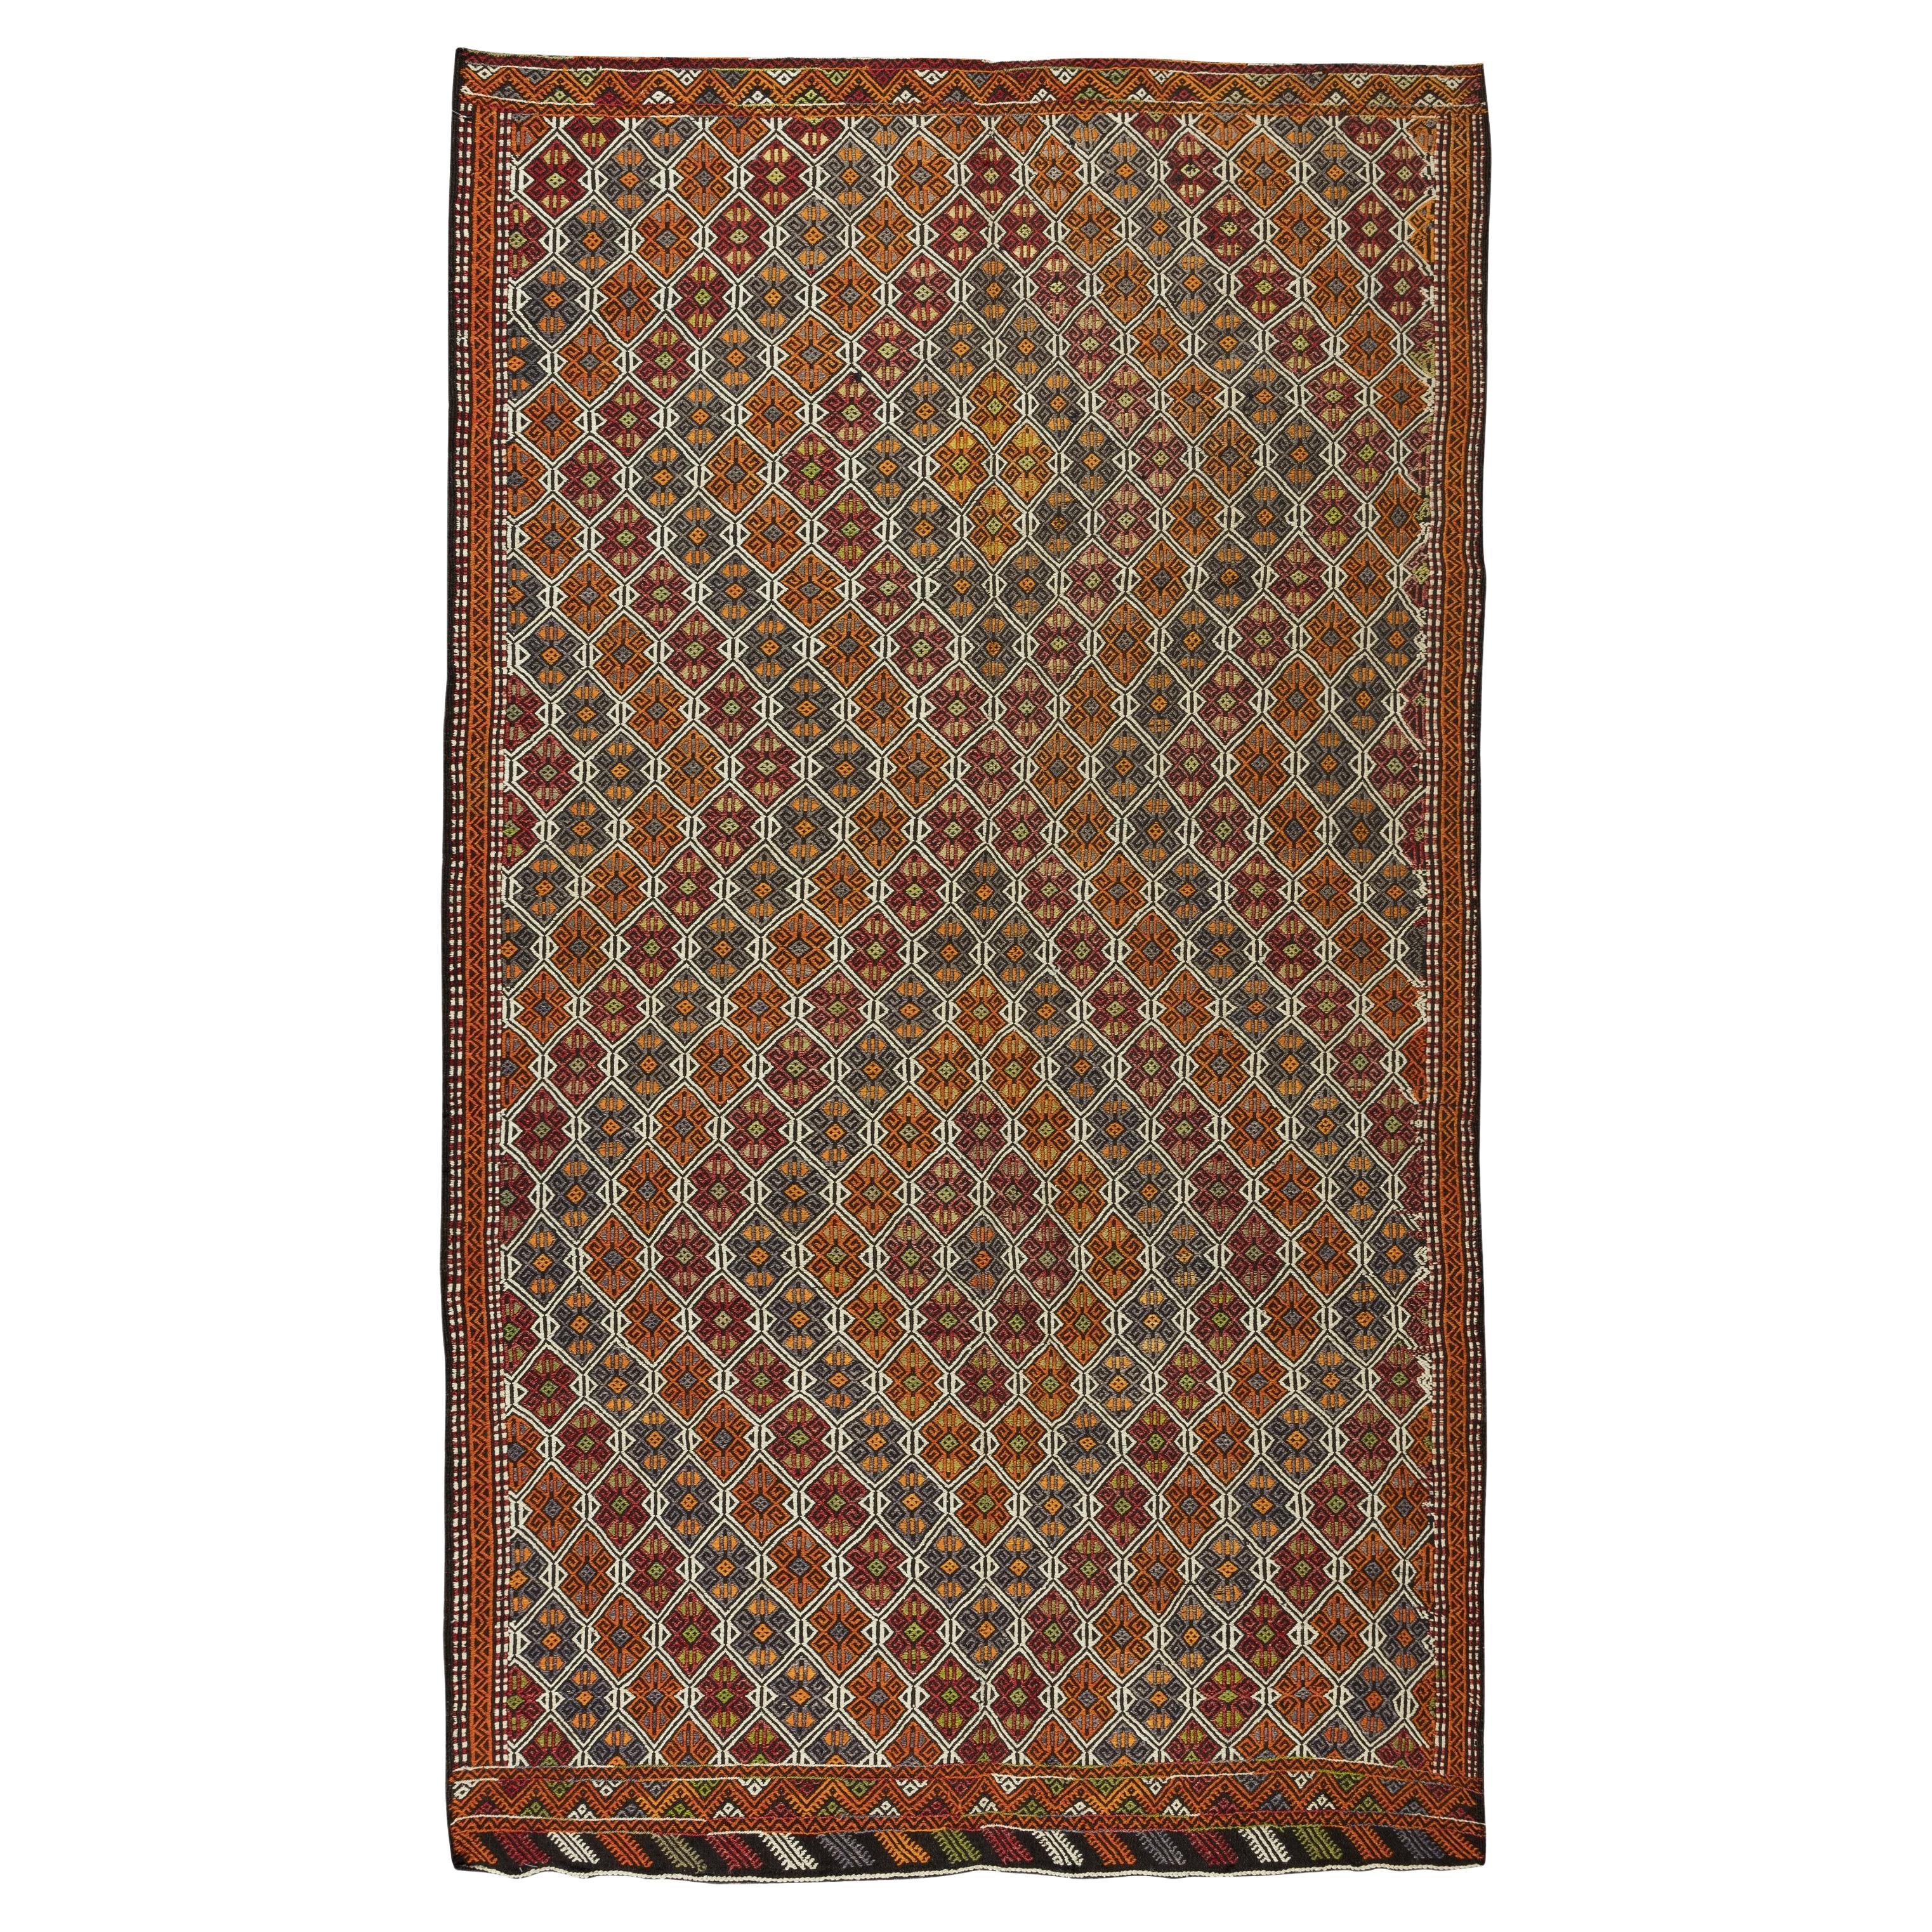 5.4x9.3 Ft Vintage Turkish Jajim Kilim, One of a Kind Handwoven Rug Made of Wool